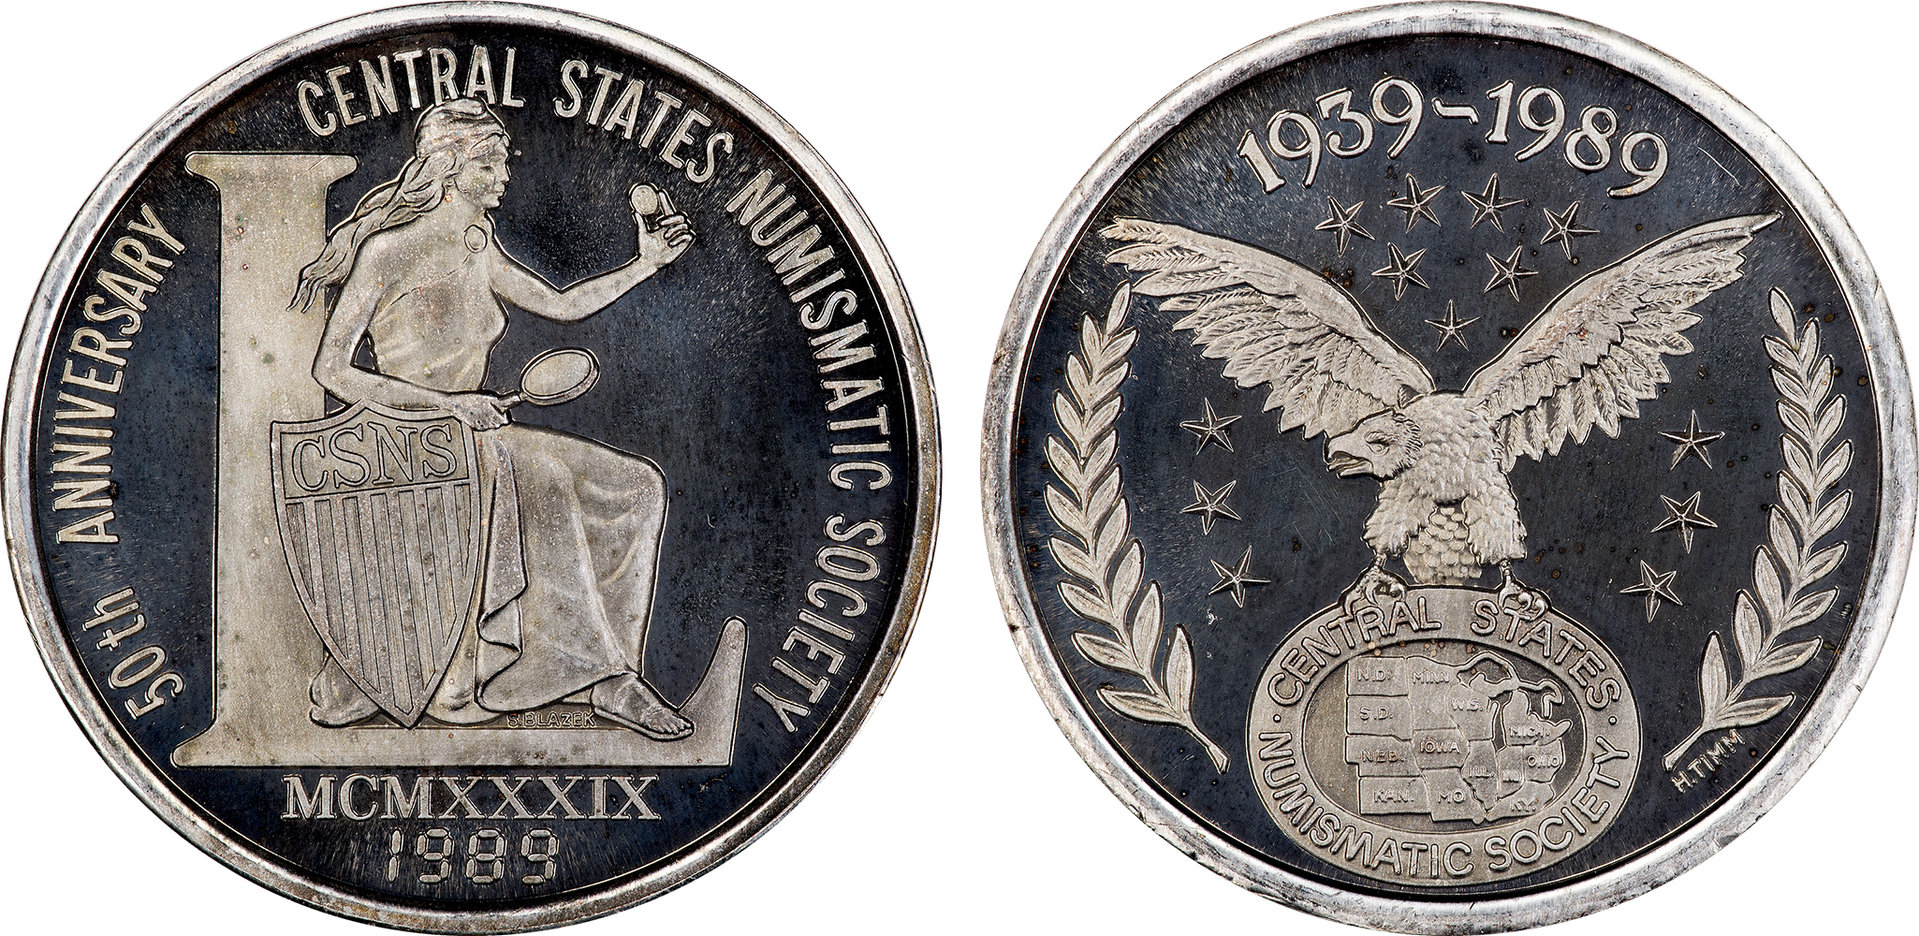 1989 Central States Silver Medal.jpg